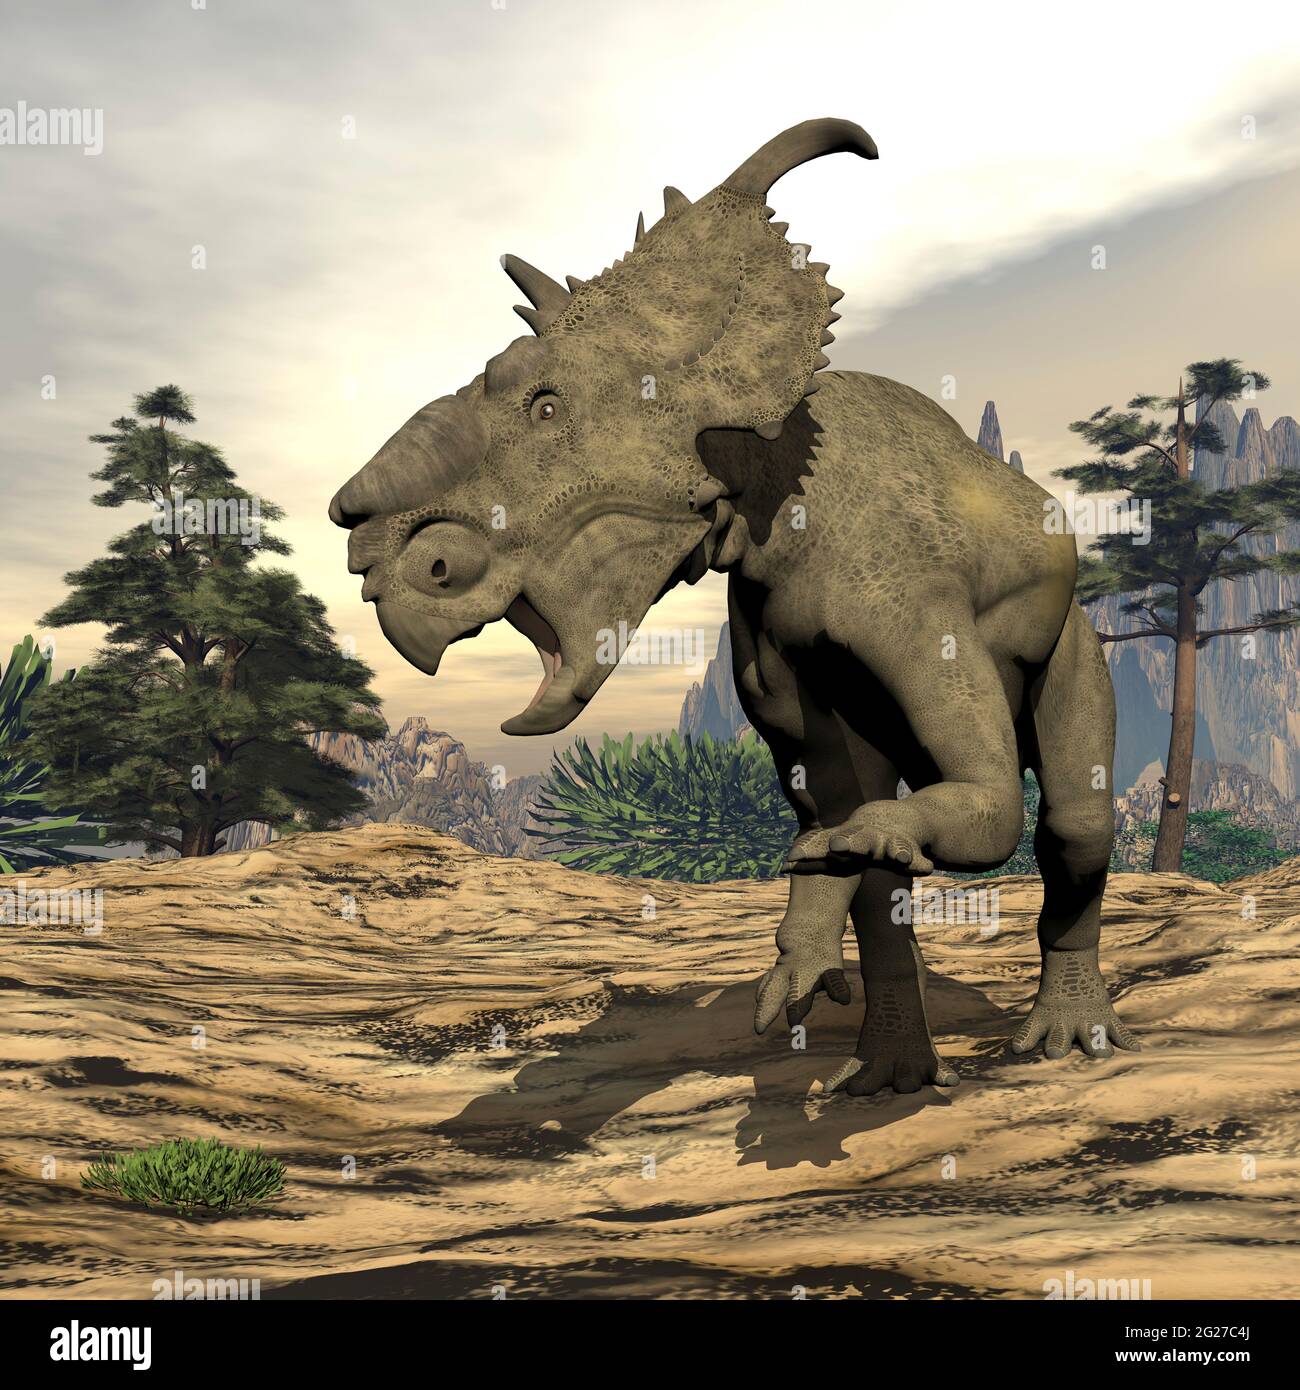 Pachyrhinosaurus dinosaur in a prehistoric landscape. Stock Photo